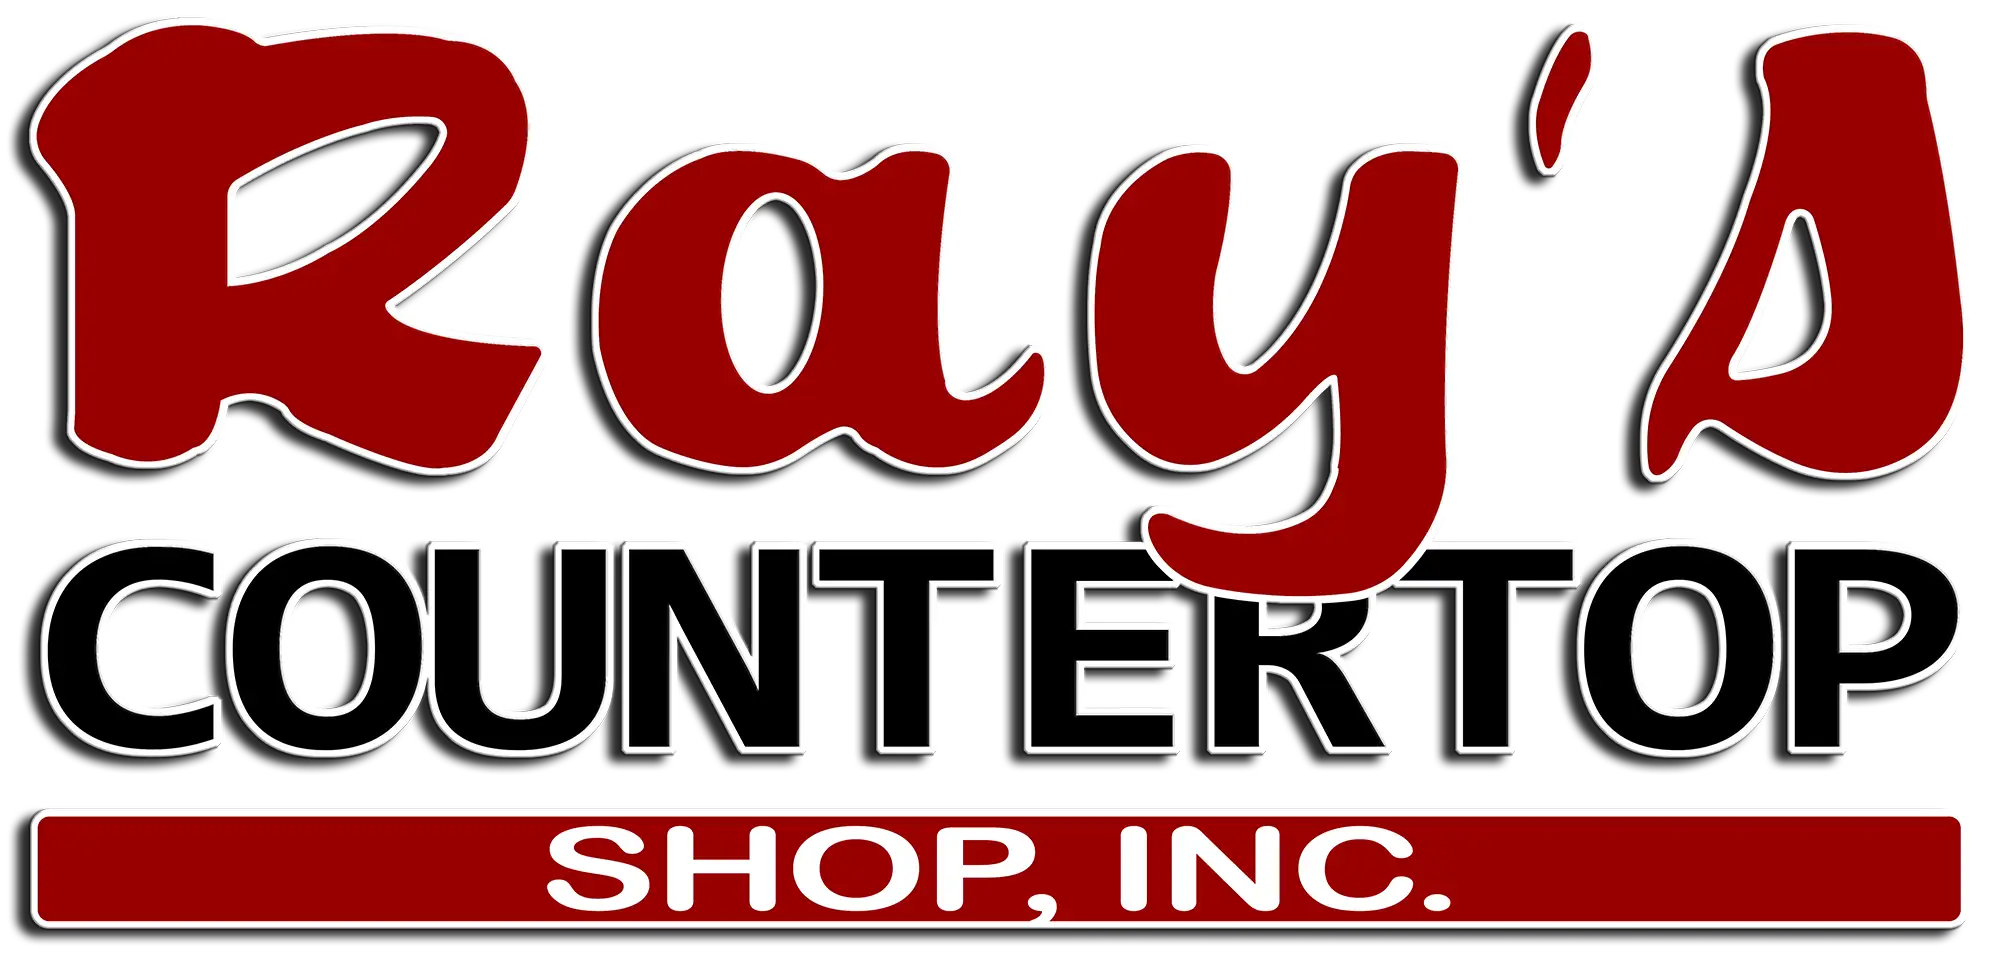 Ray's Countertop Shop, Inc. logo - Springfield, IL